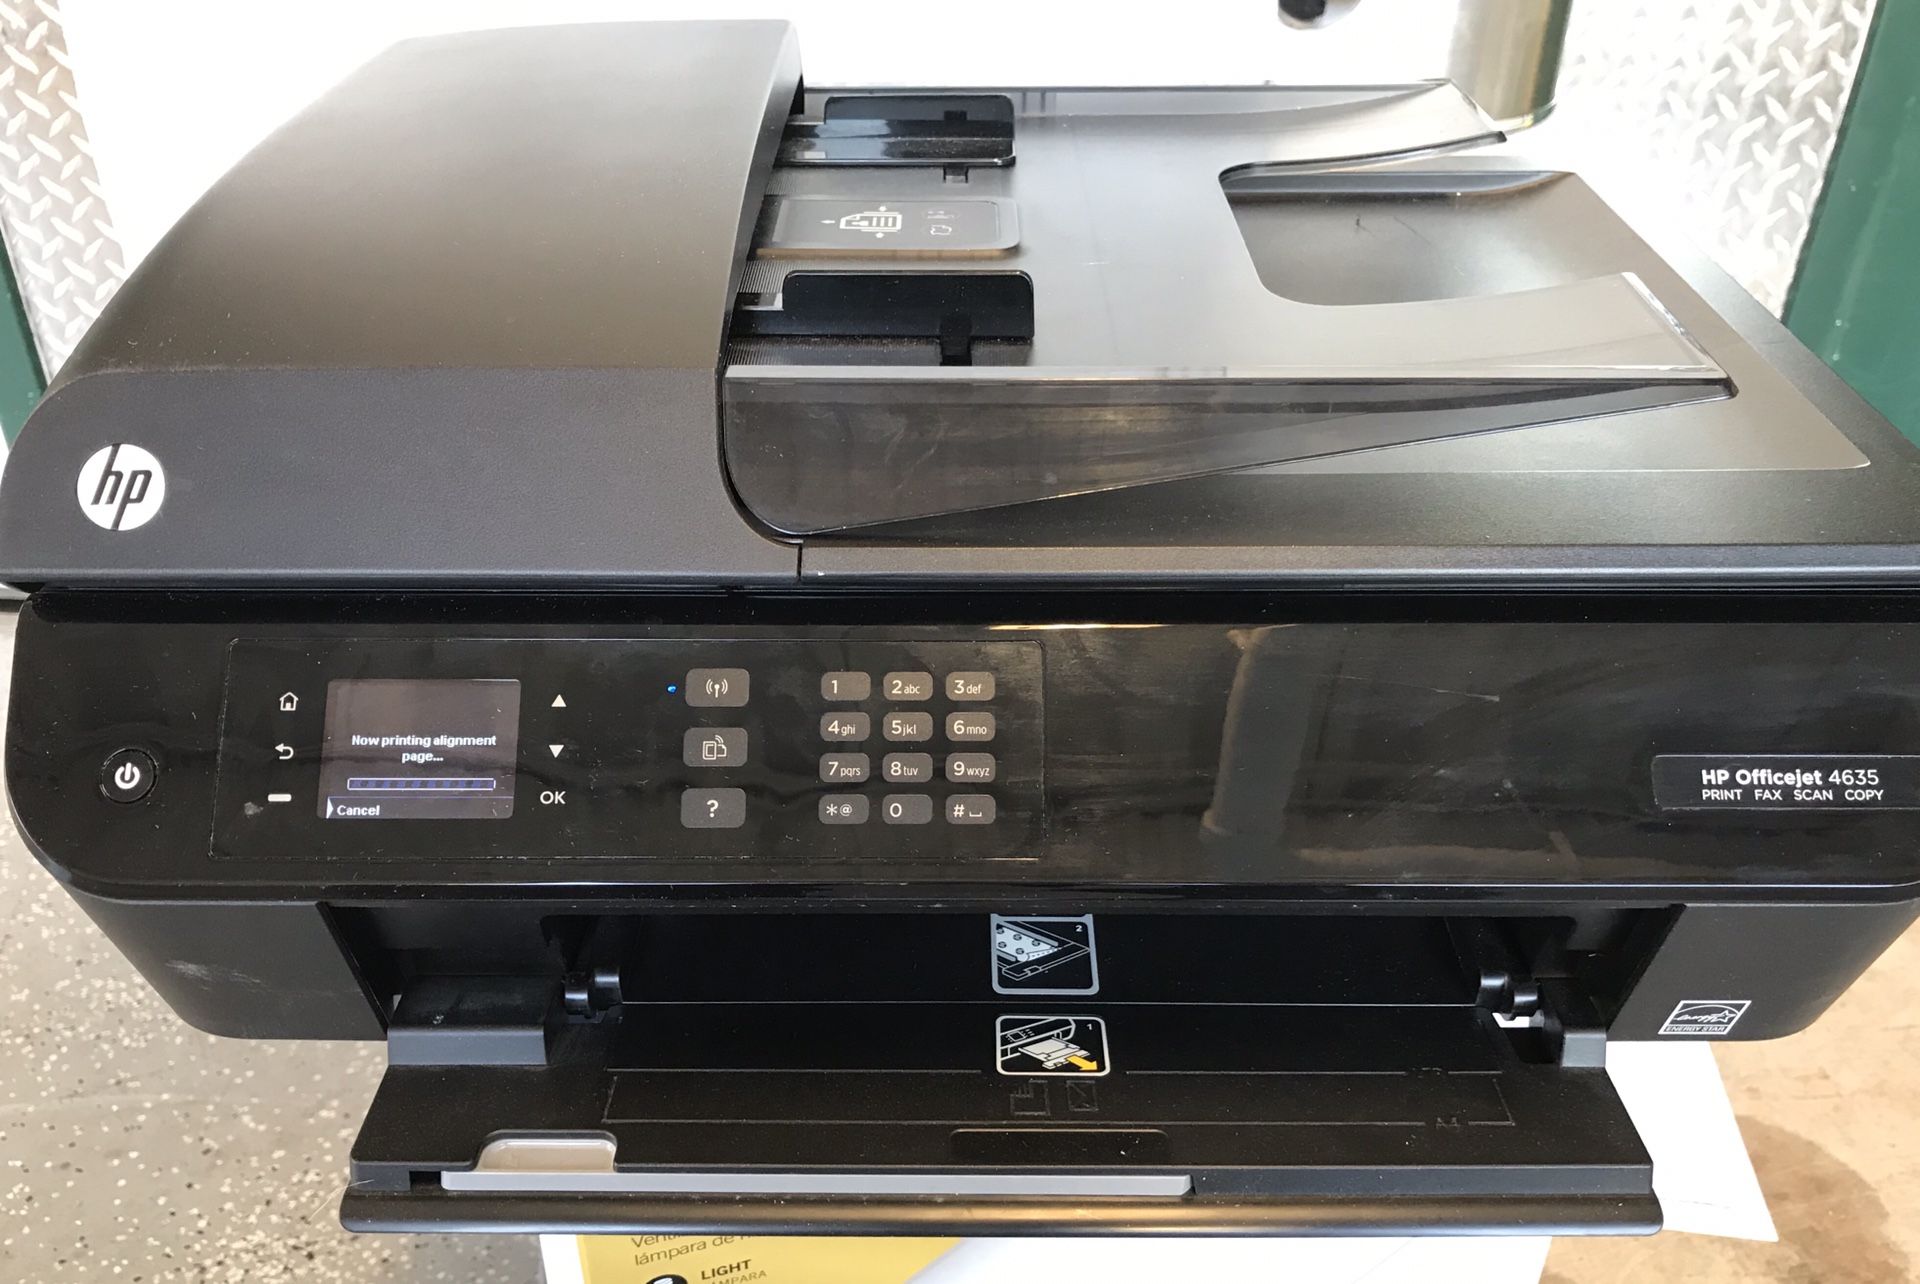 Hp Officejet 4635 Wireless E All In One Inkjet Printer Scan Copy Fax For Sale In Lanham Md 8534